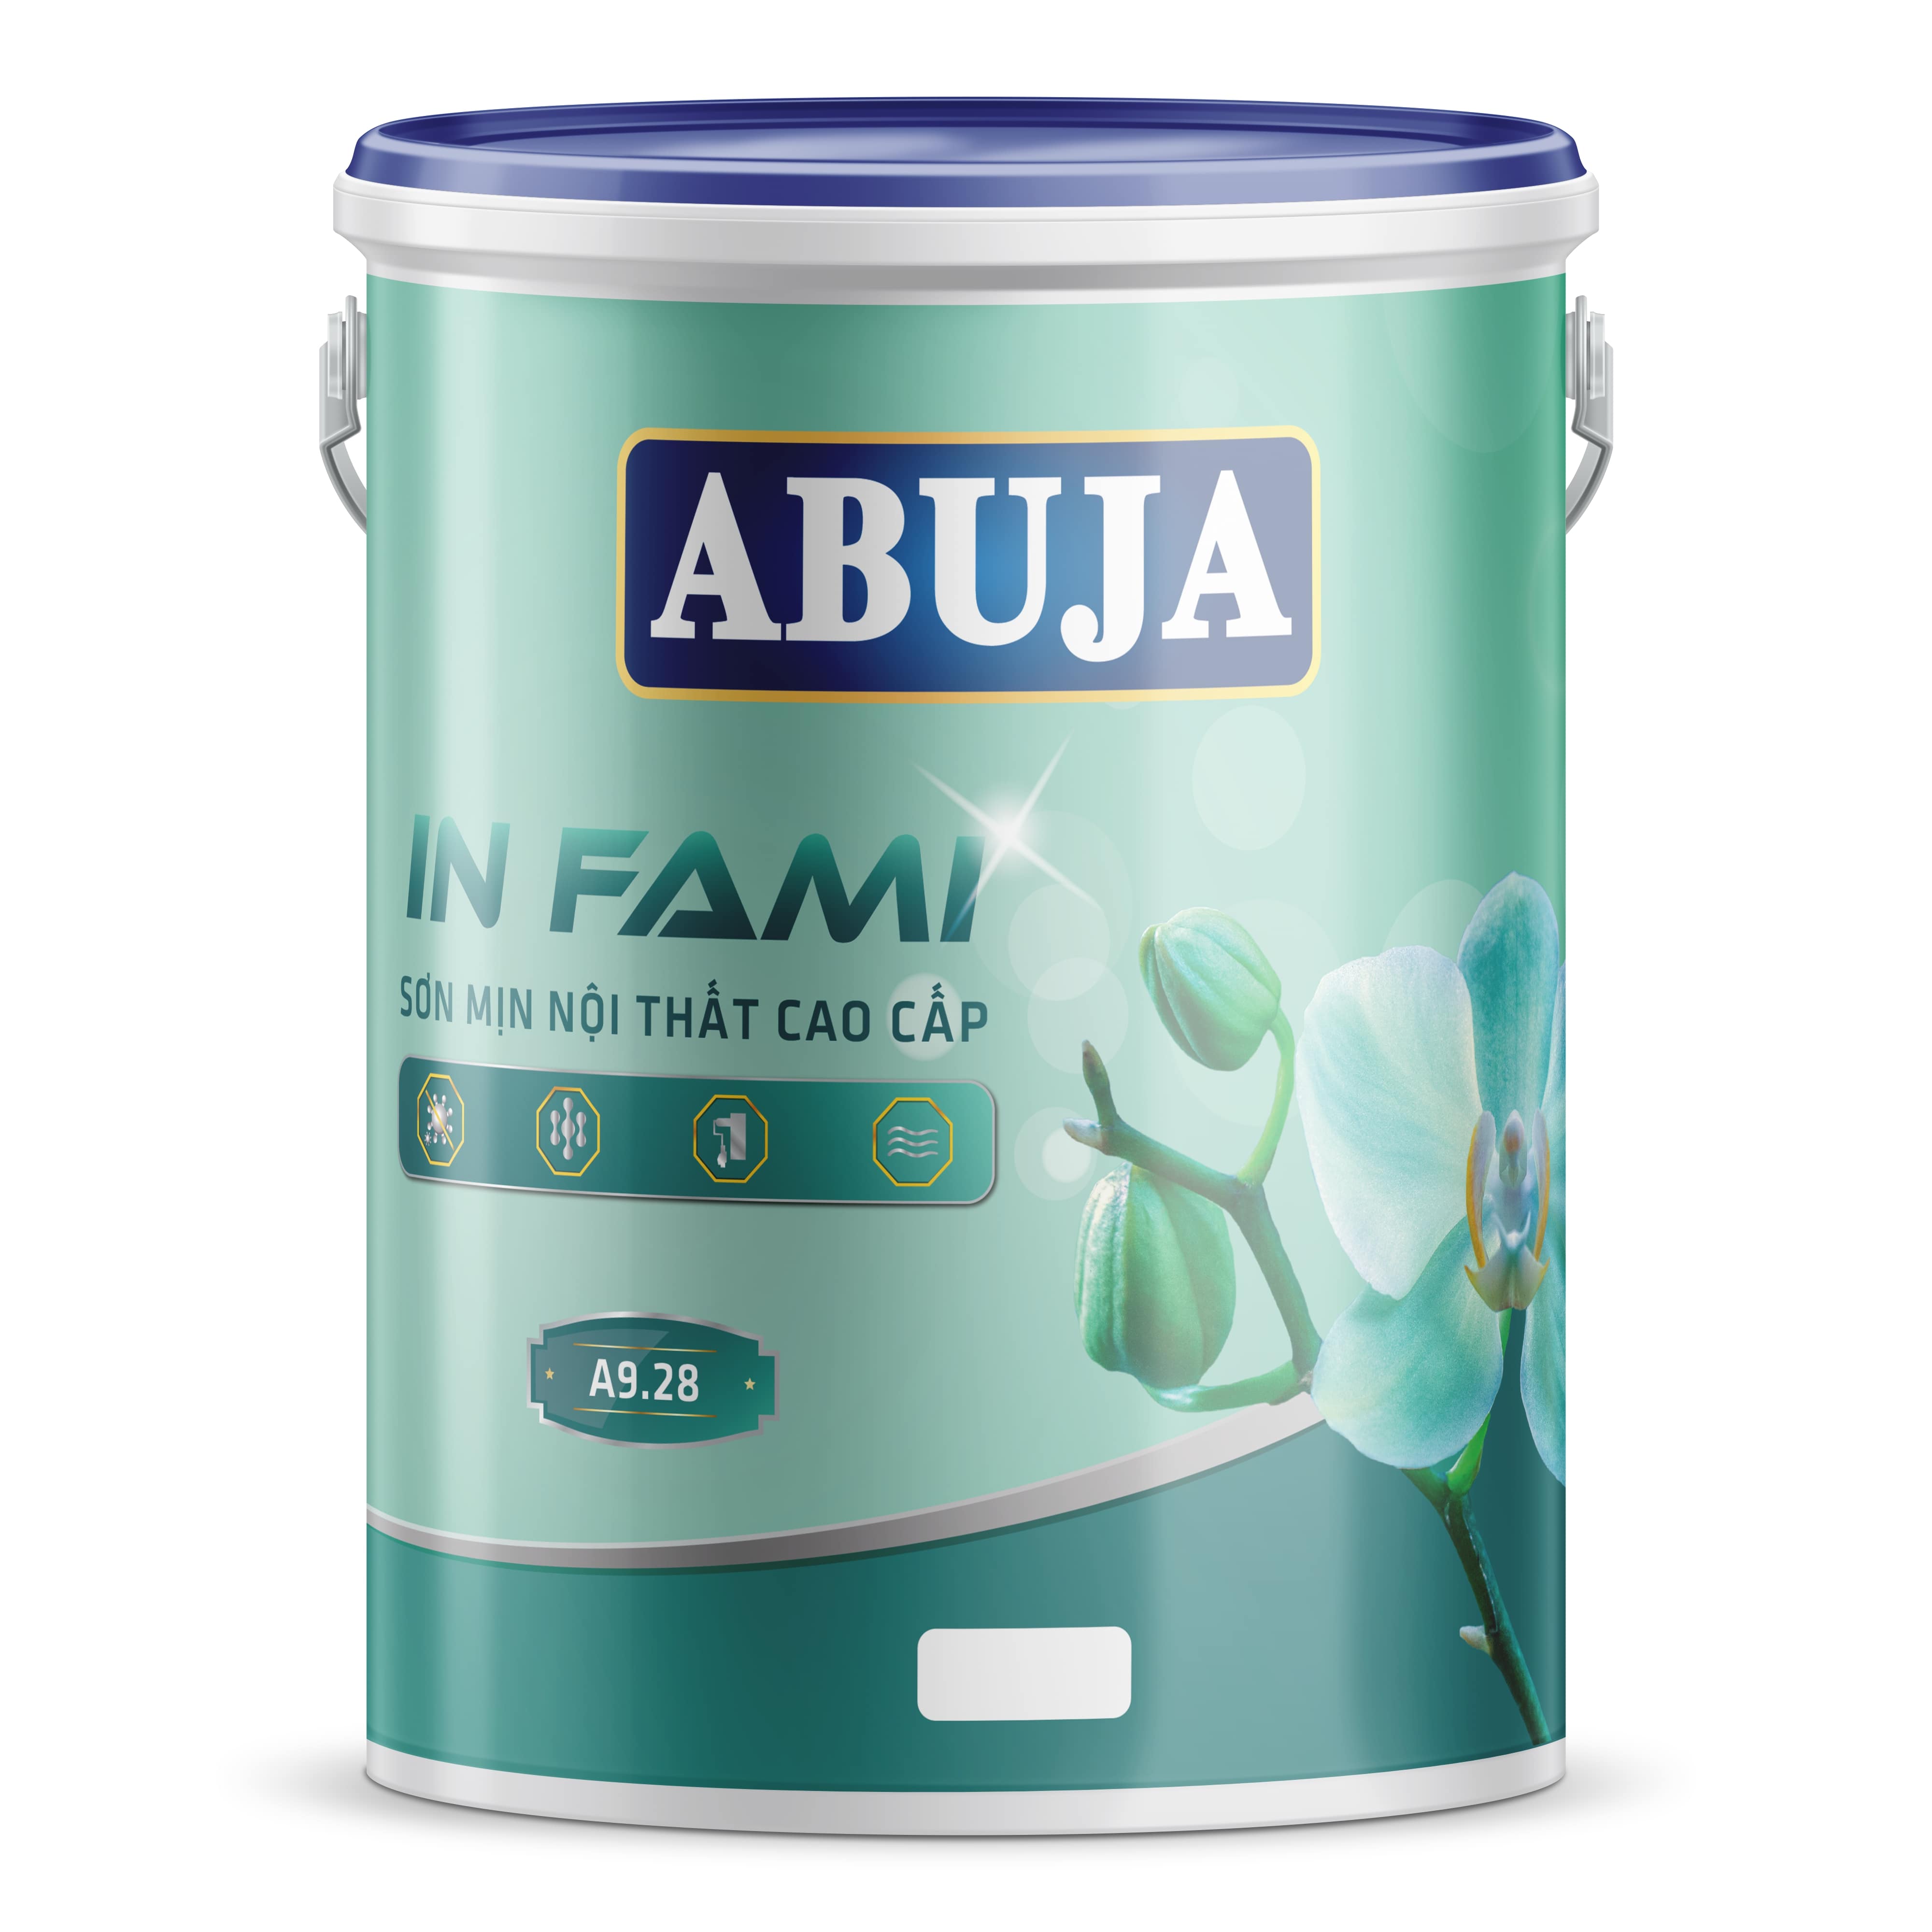 ABUJA - IN FAMI: Sơn mịn nội thất cao cấp A9.28 6KG